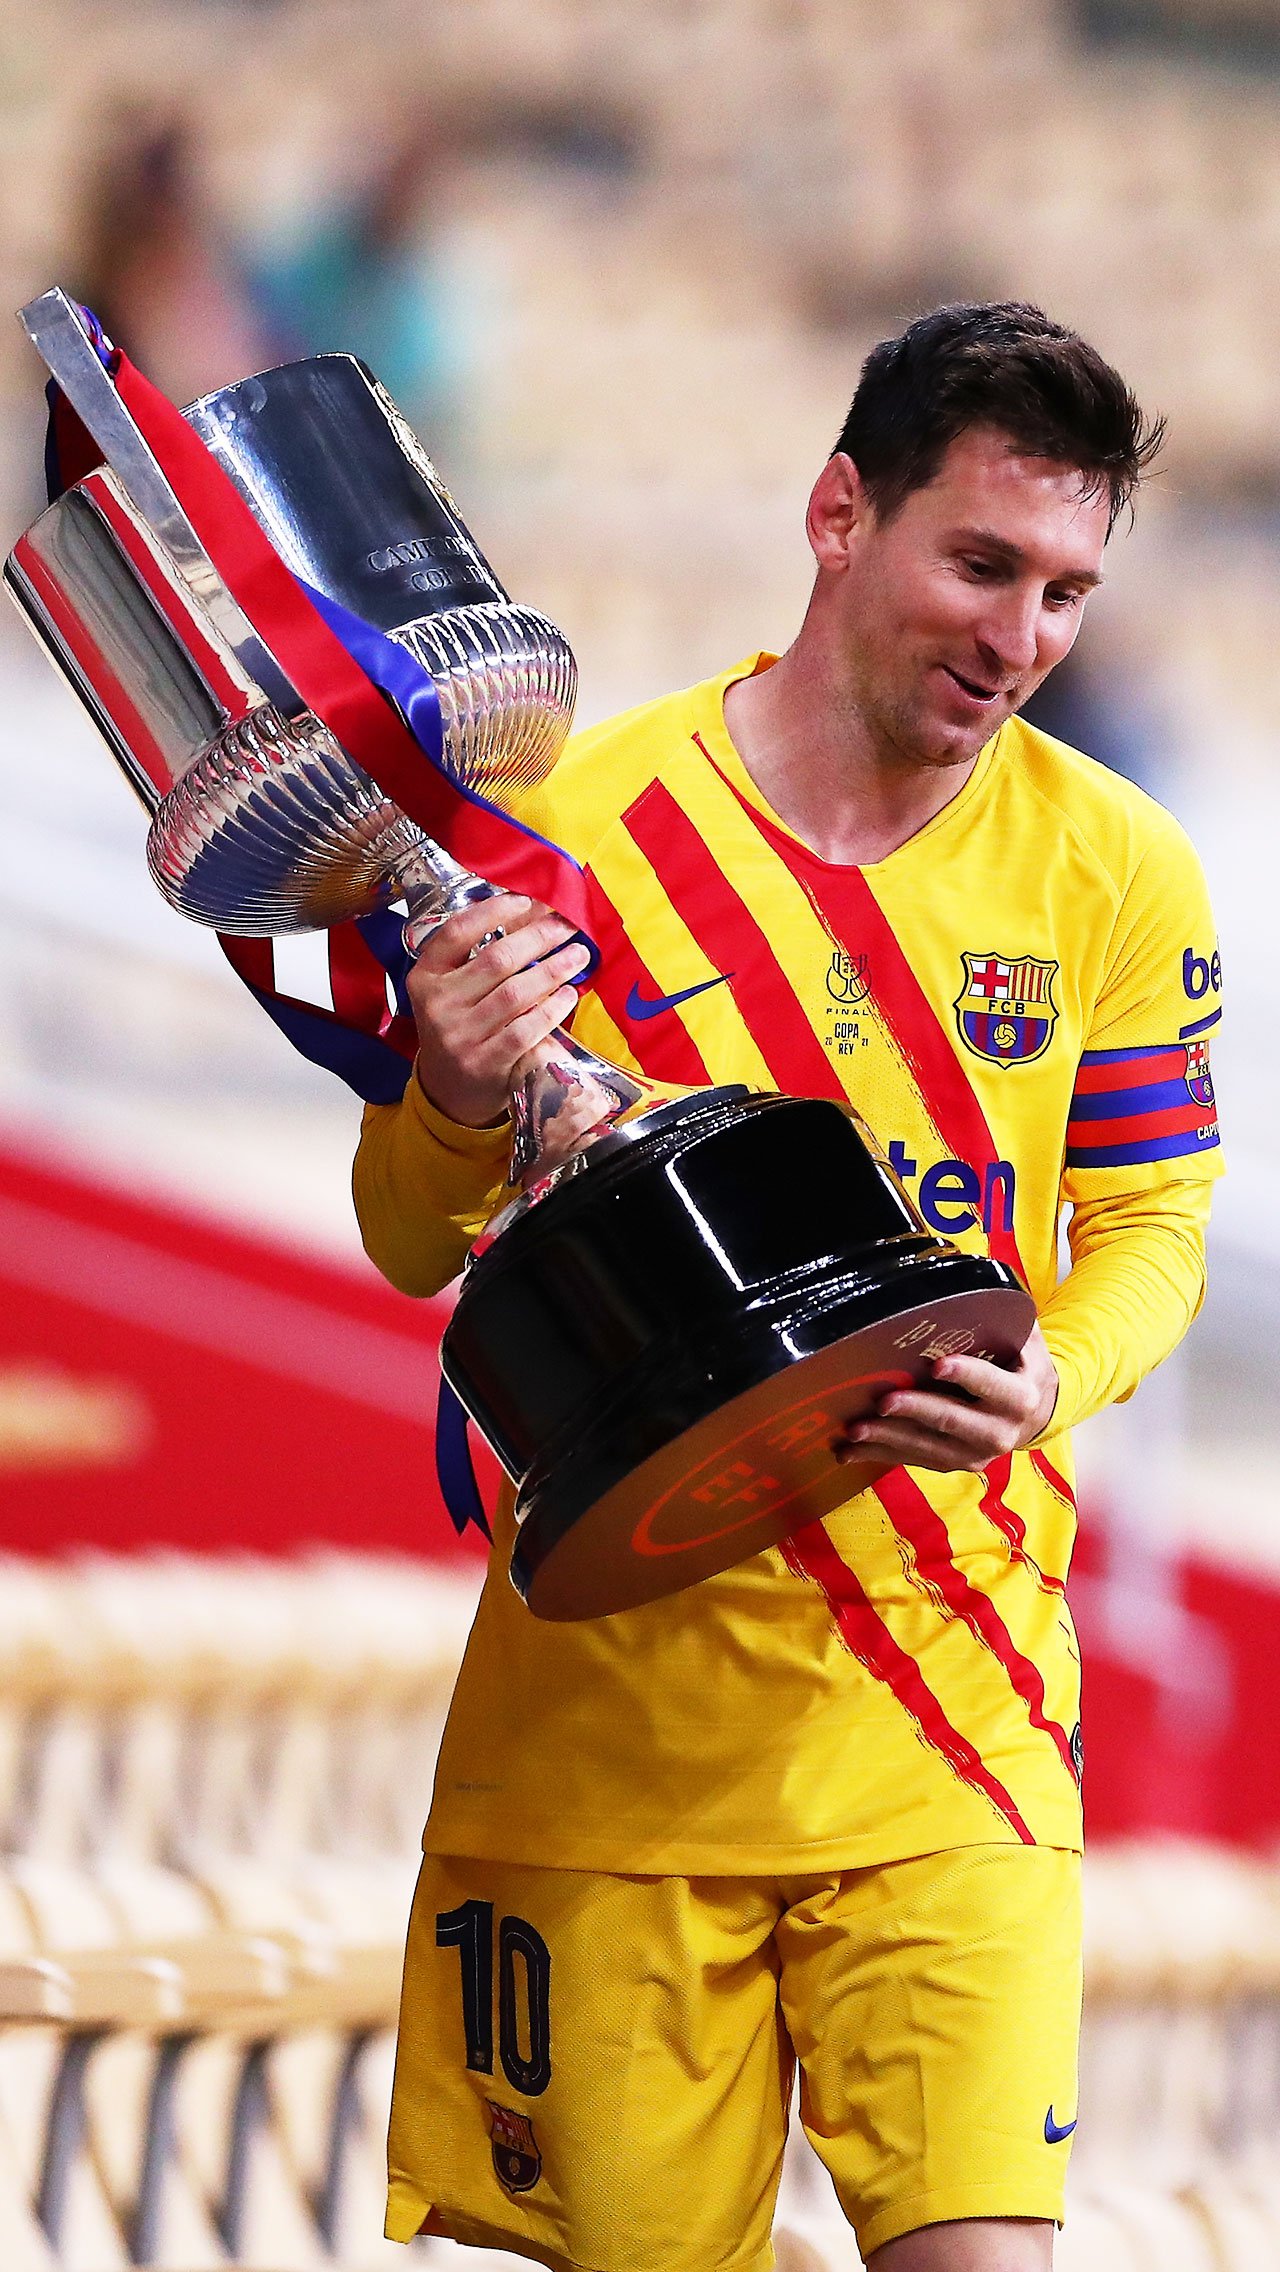 2021. Последний трофей Лео в «Барселоне» – Кубок Испании.